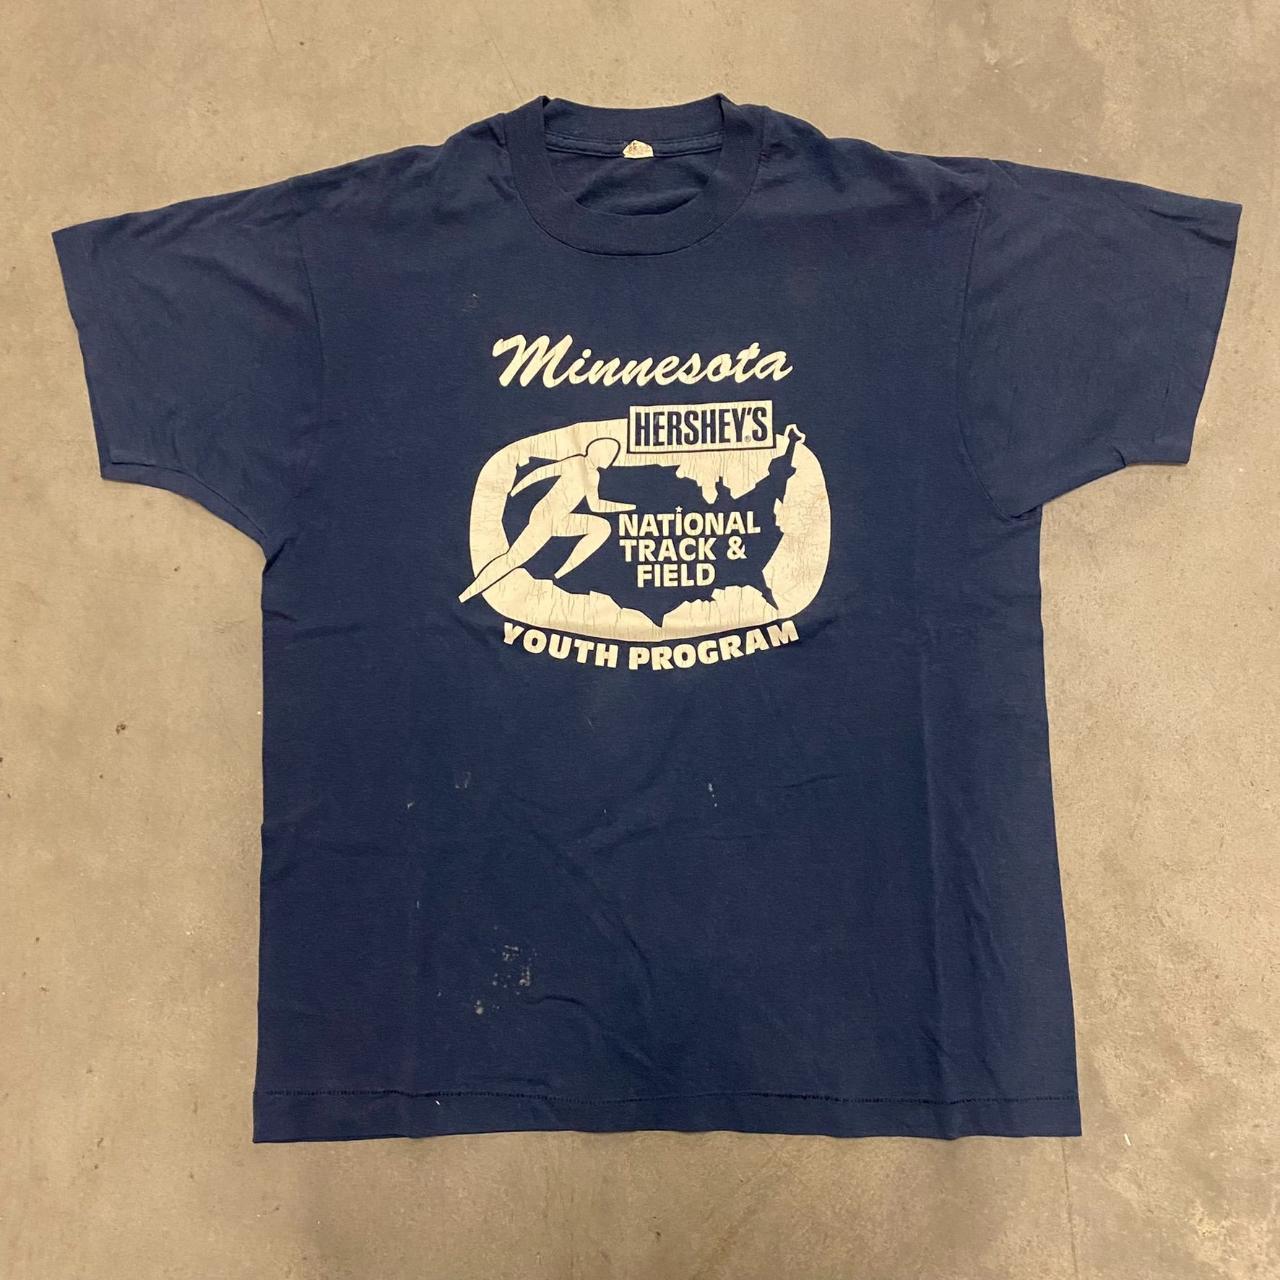 Product Image 1 - Hershey's Youth Program Vintage T-Shirt
Size: